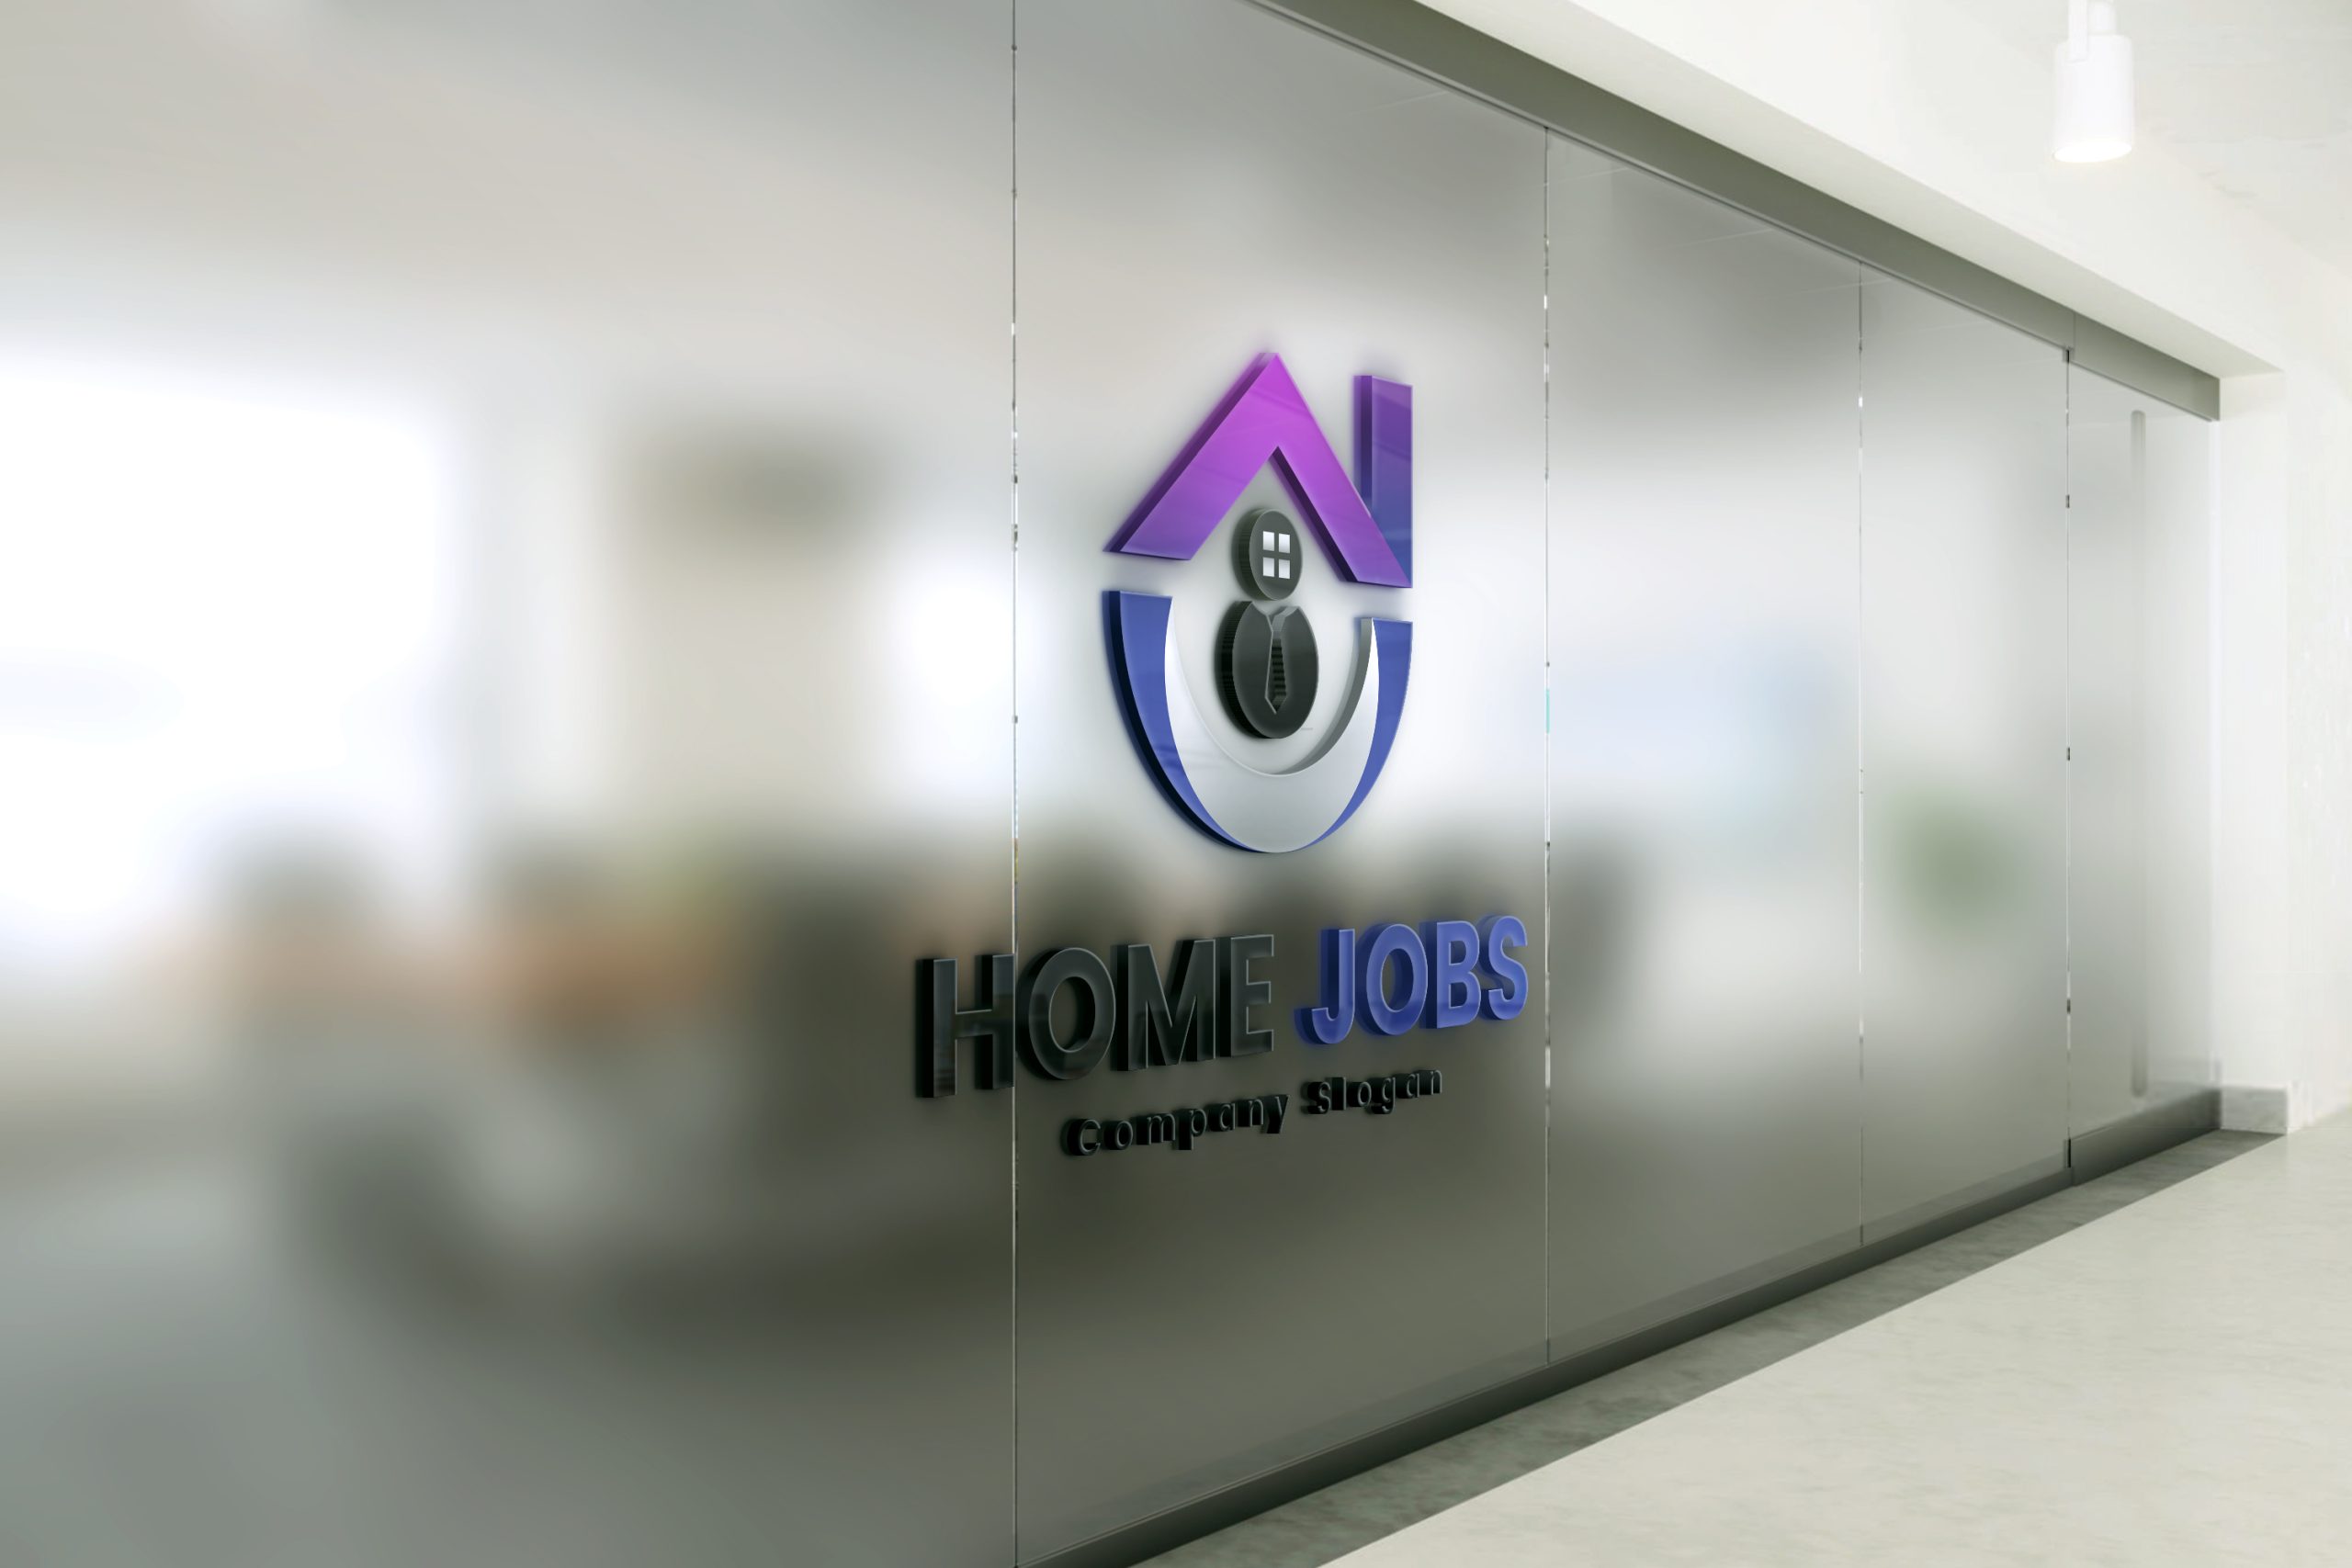 Job Company Logo Design Template